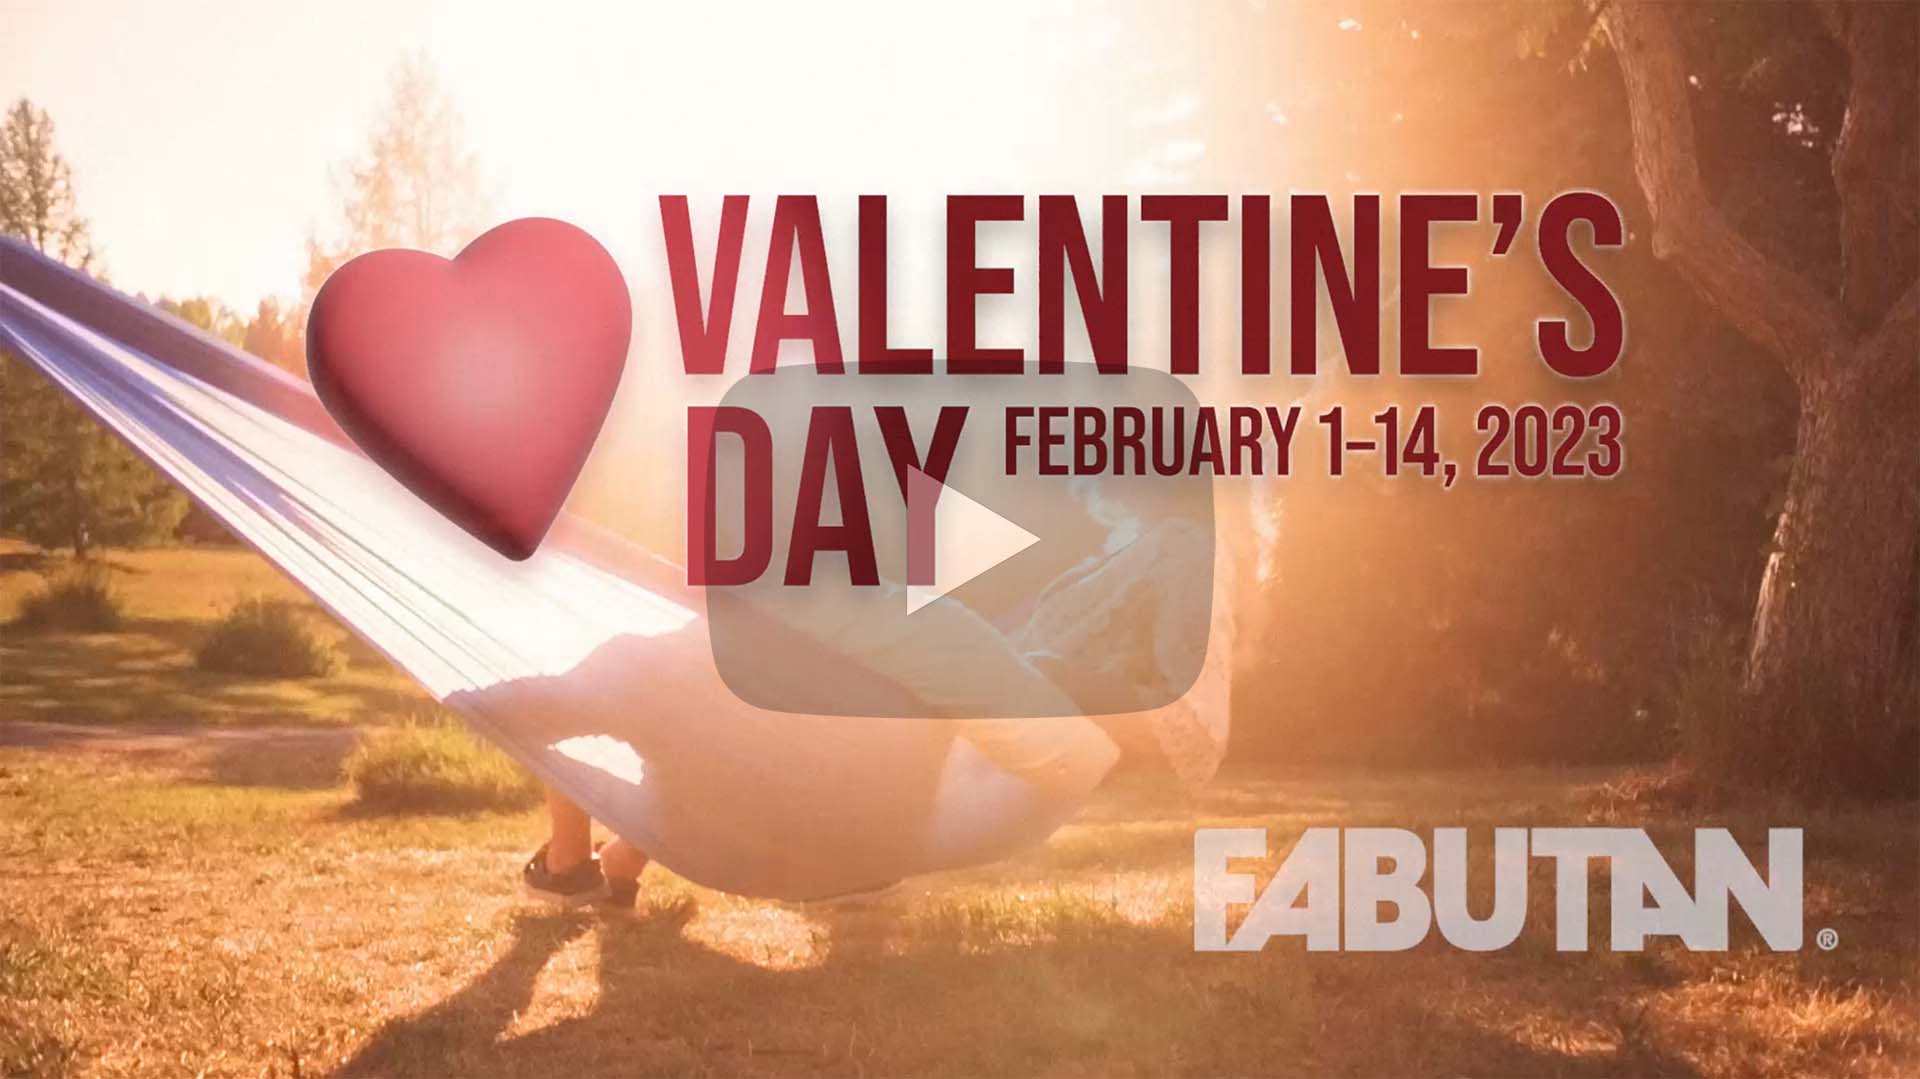 FABUTAN | Valentine's Day 2023